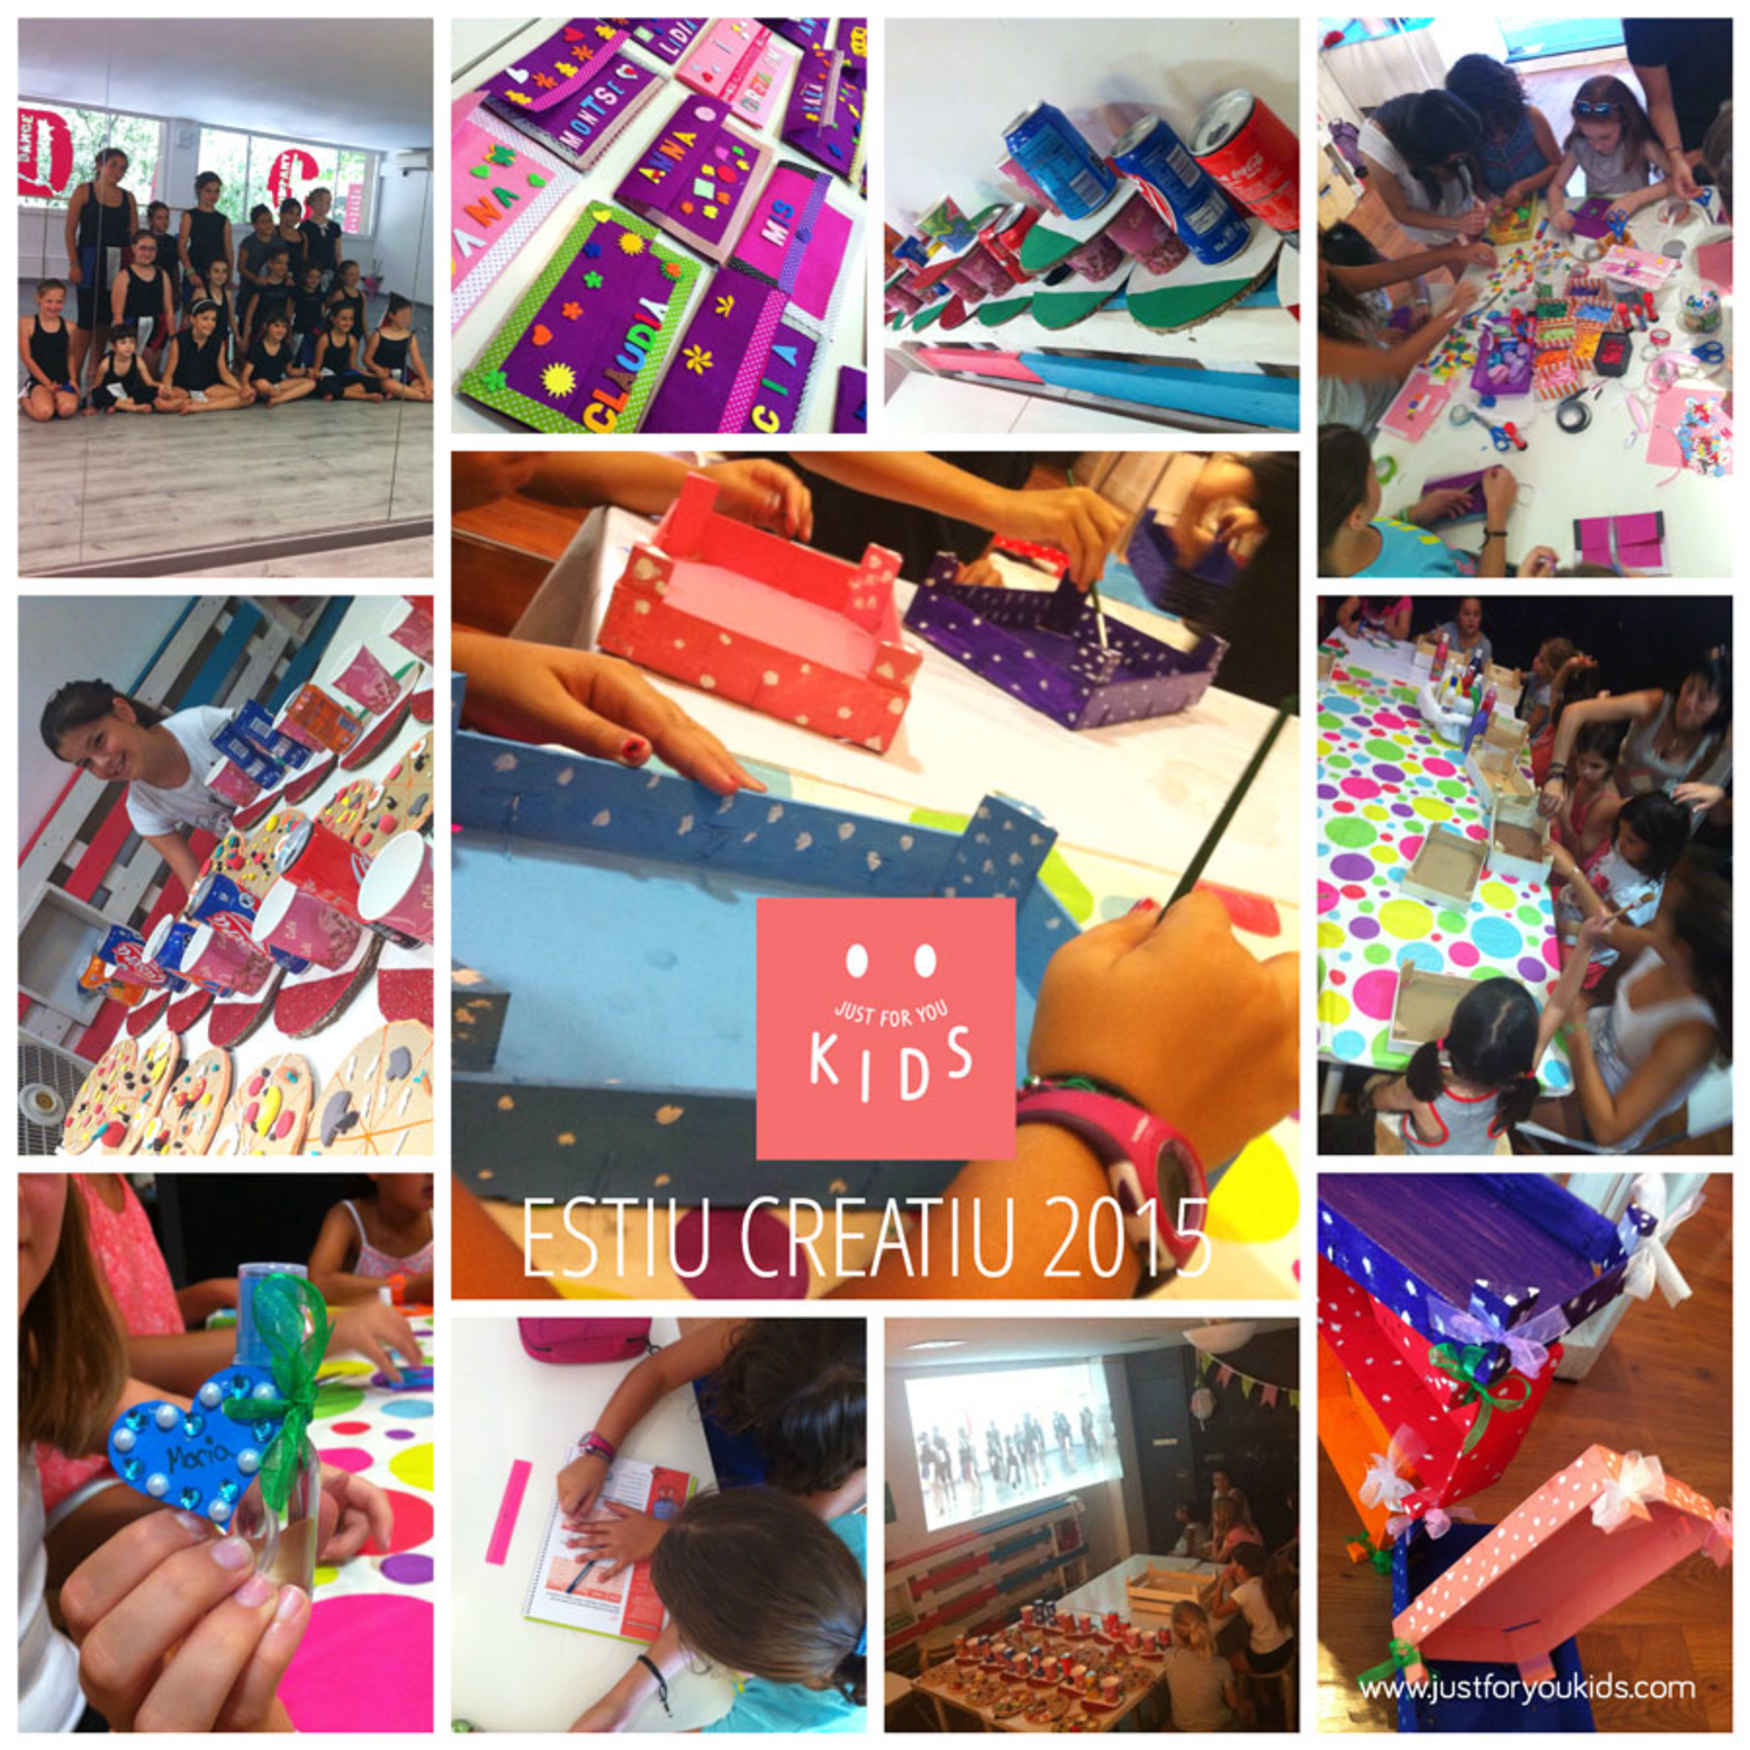 Casal Estiu Creatiu 2015 ¡Un viaje apasionante! - Niños, manualidades, actividades infantiles Barcelona